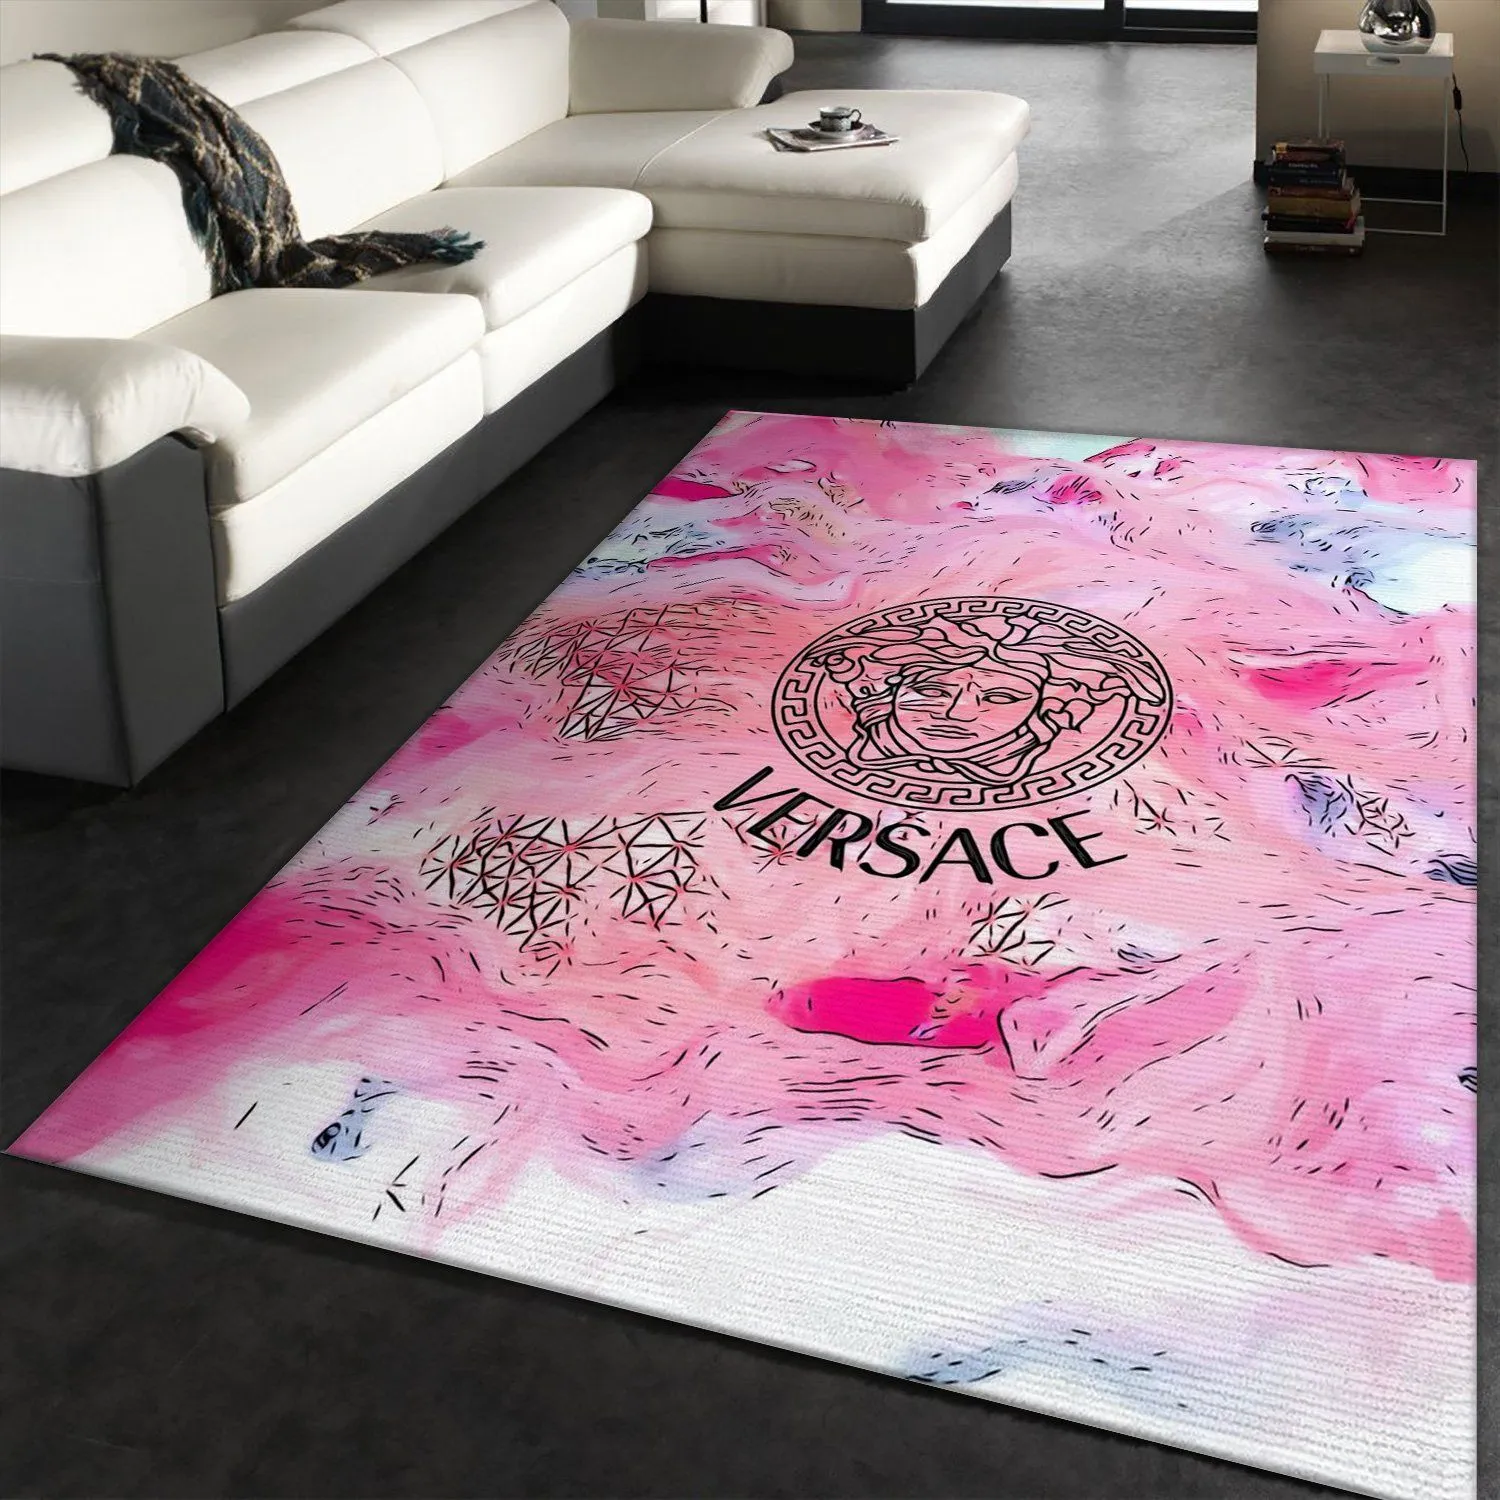 Versace Rectangle Rug Luxury Home Decor Area Carpet Fashion Brand Door Mat